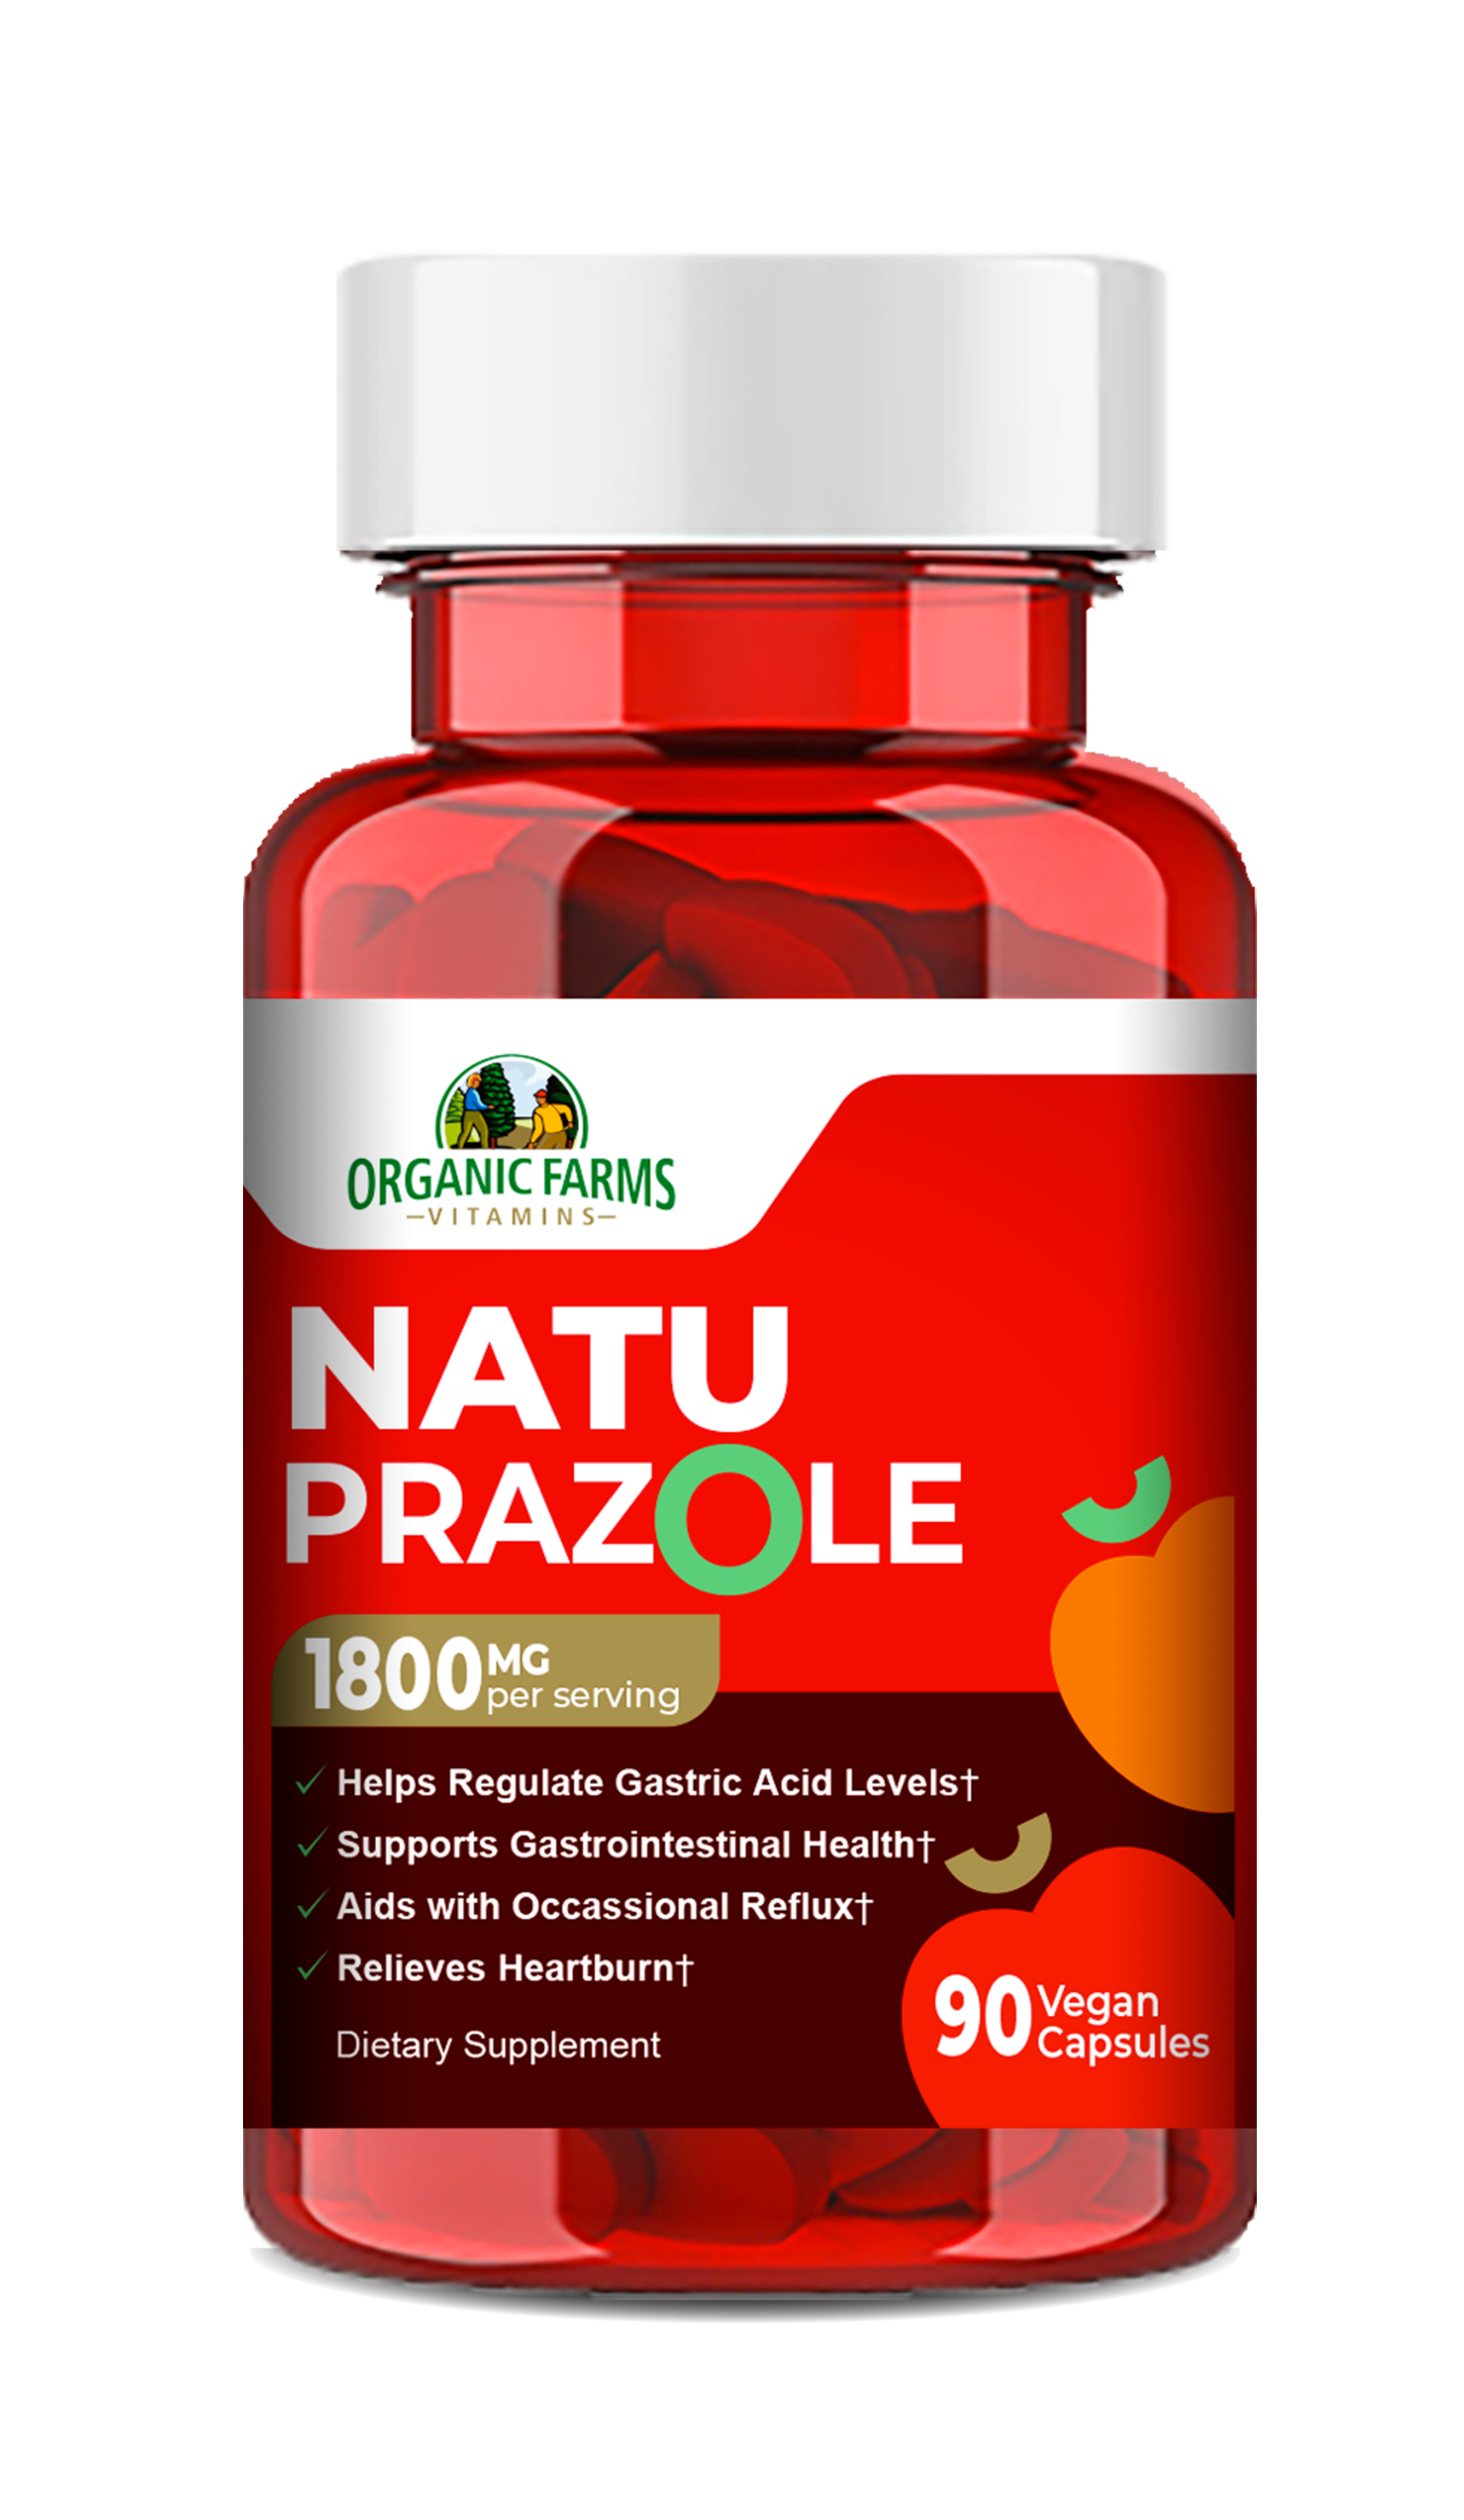 Natuprazole 90 capsulas vegan dietary supplement, digestivo natural